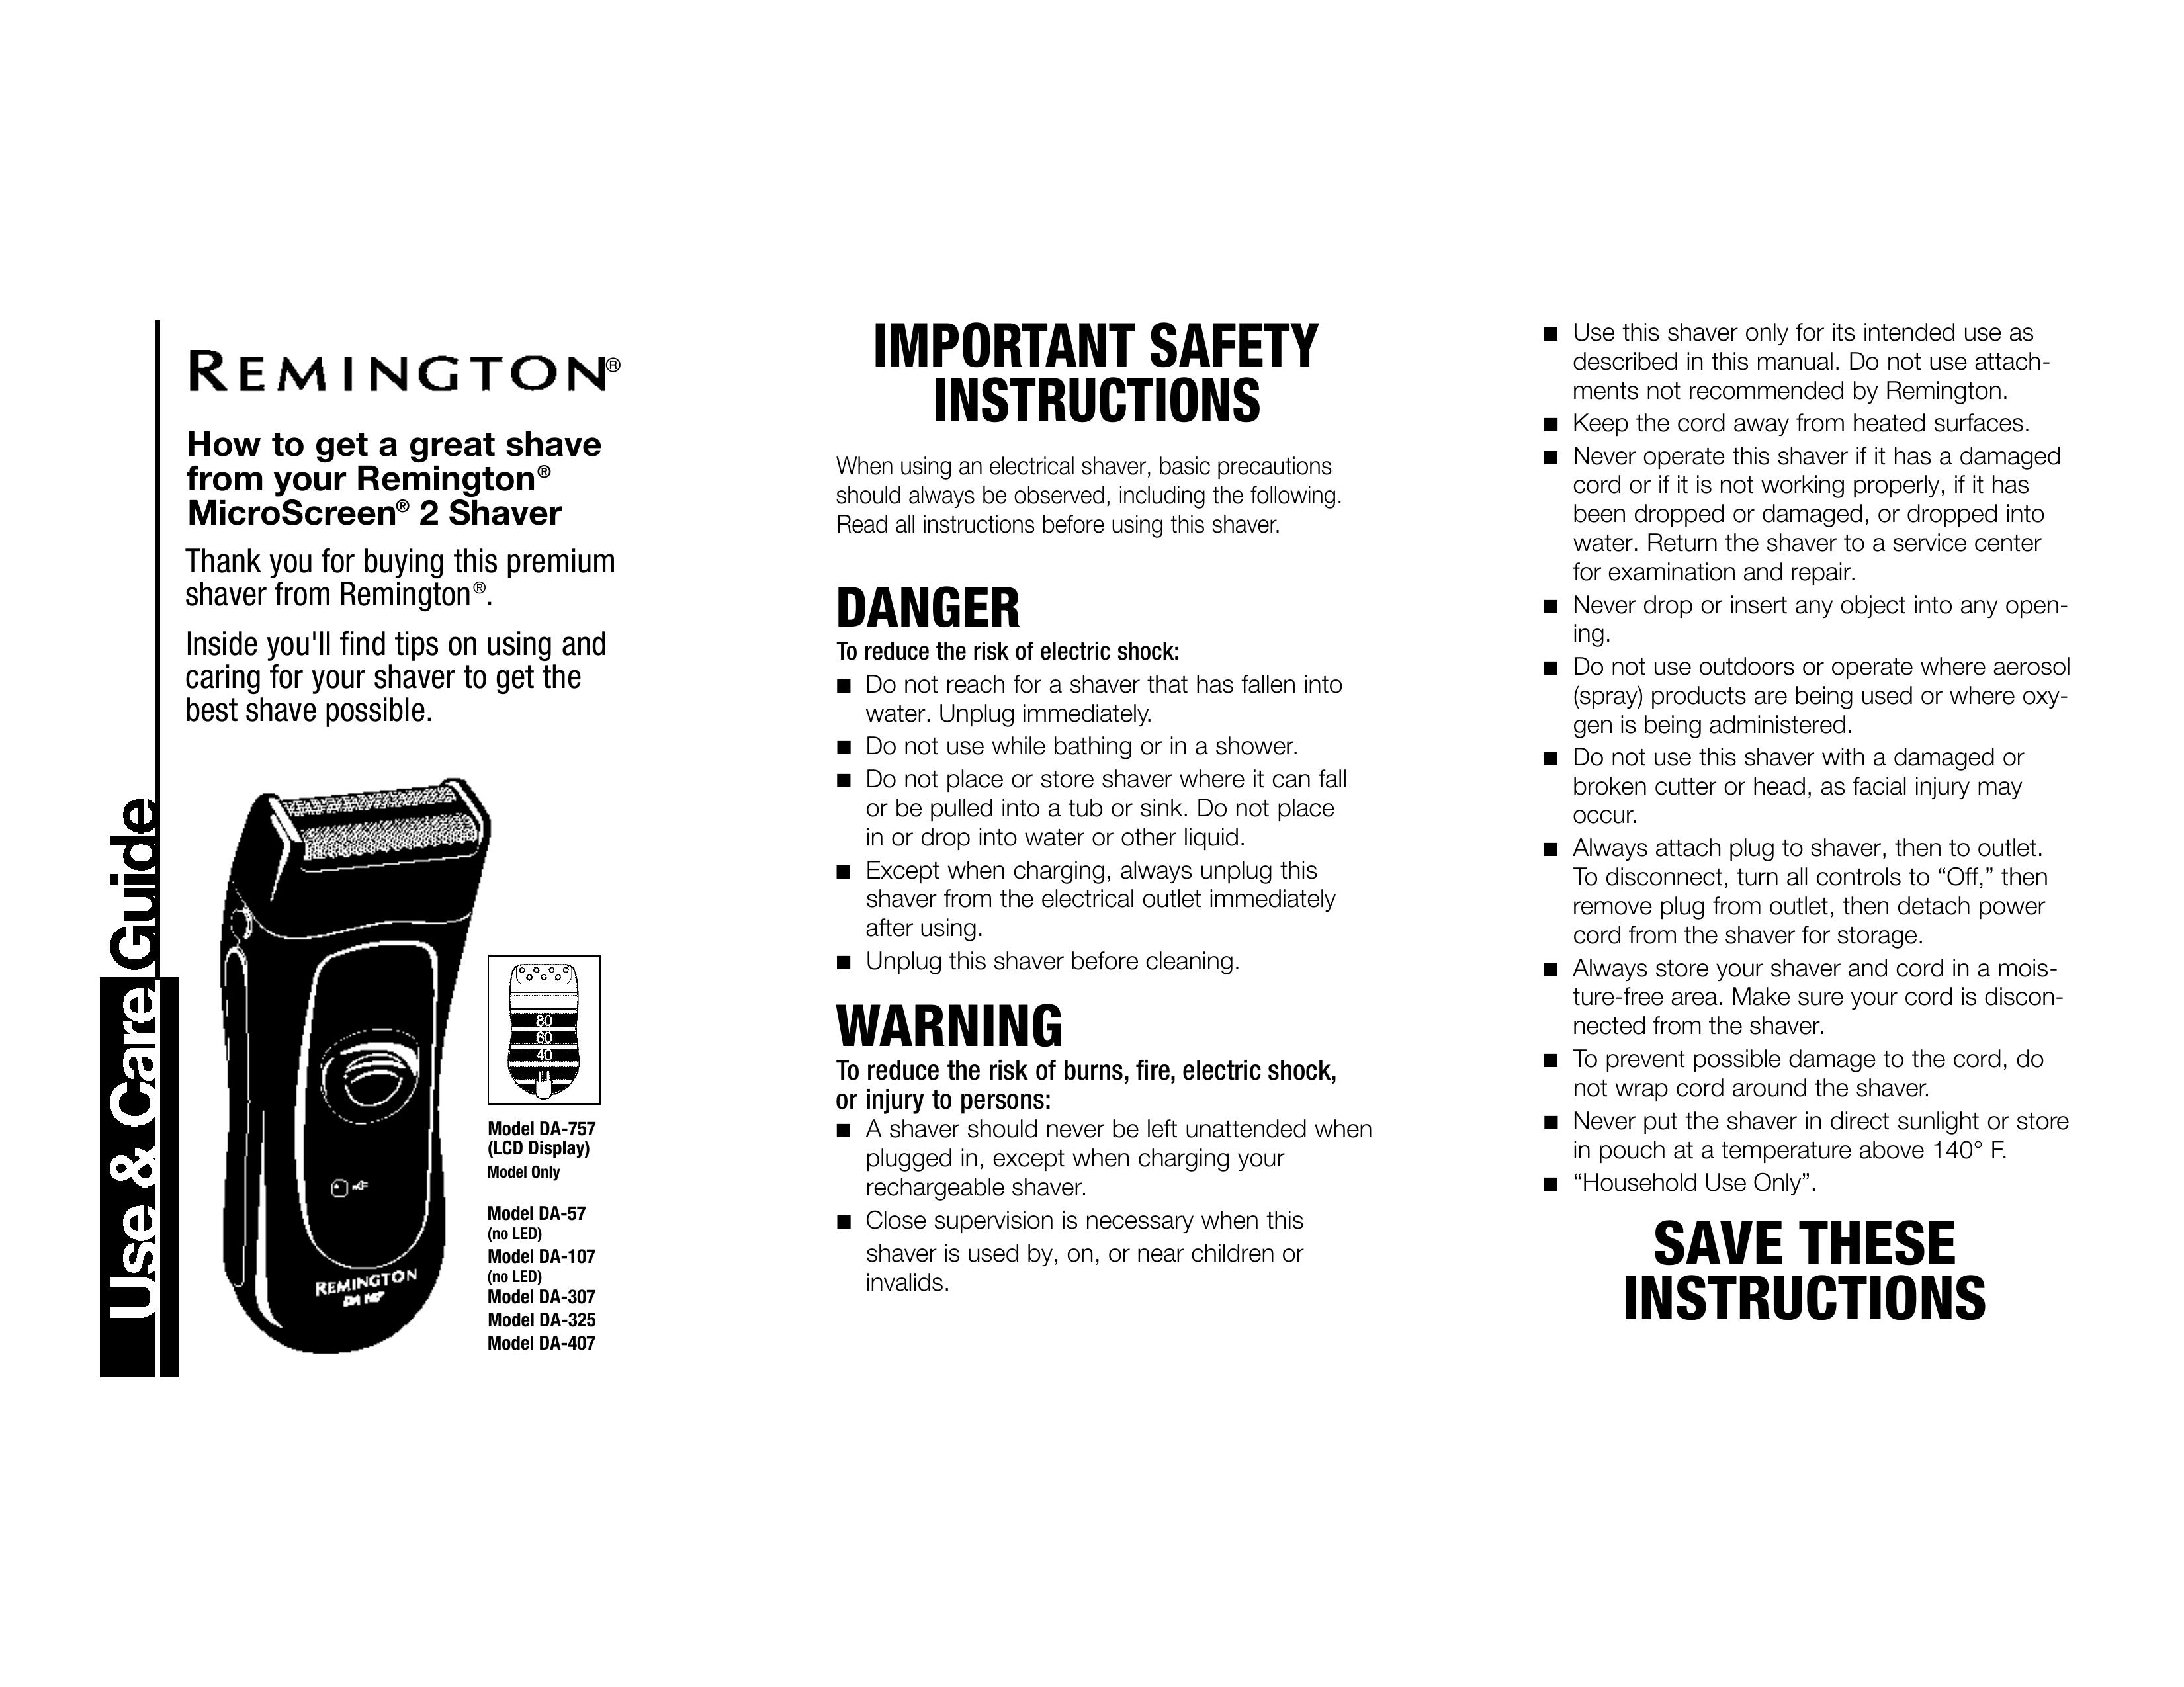 Remington DA-325 Electric Shaver User Manual